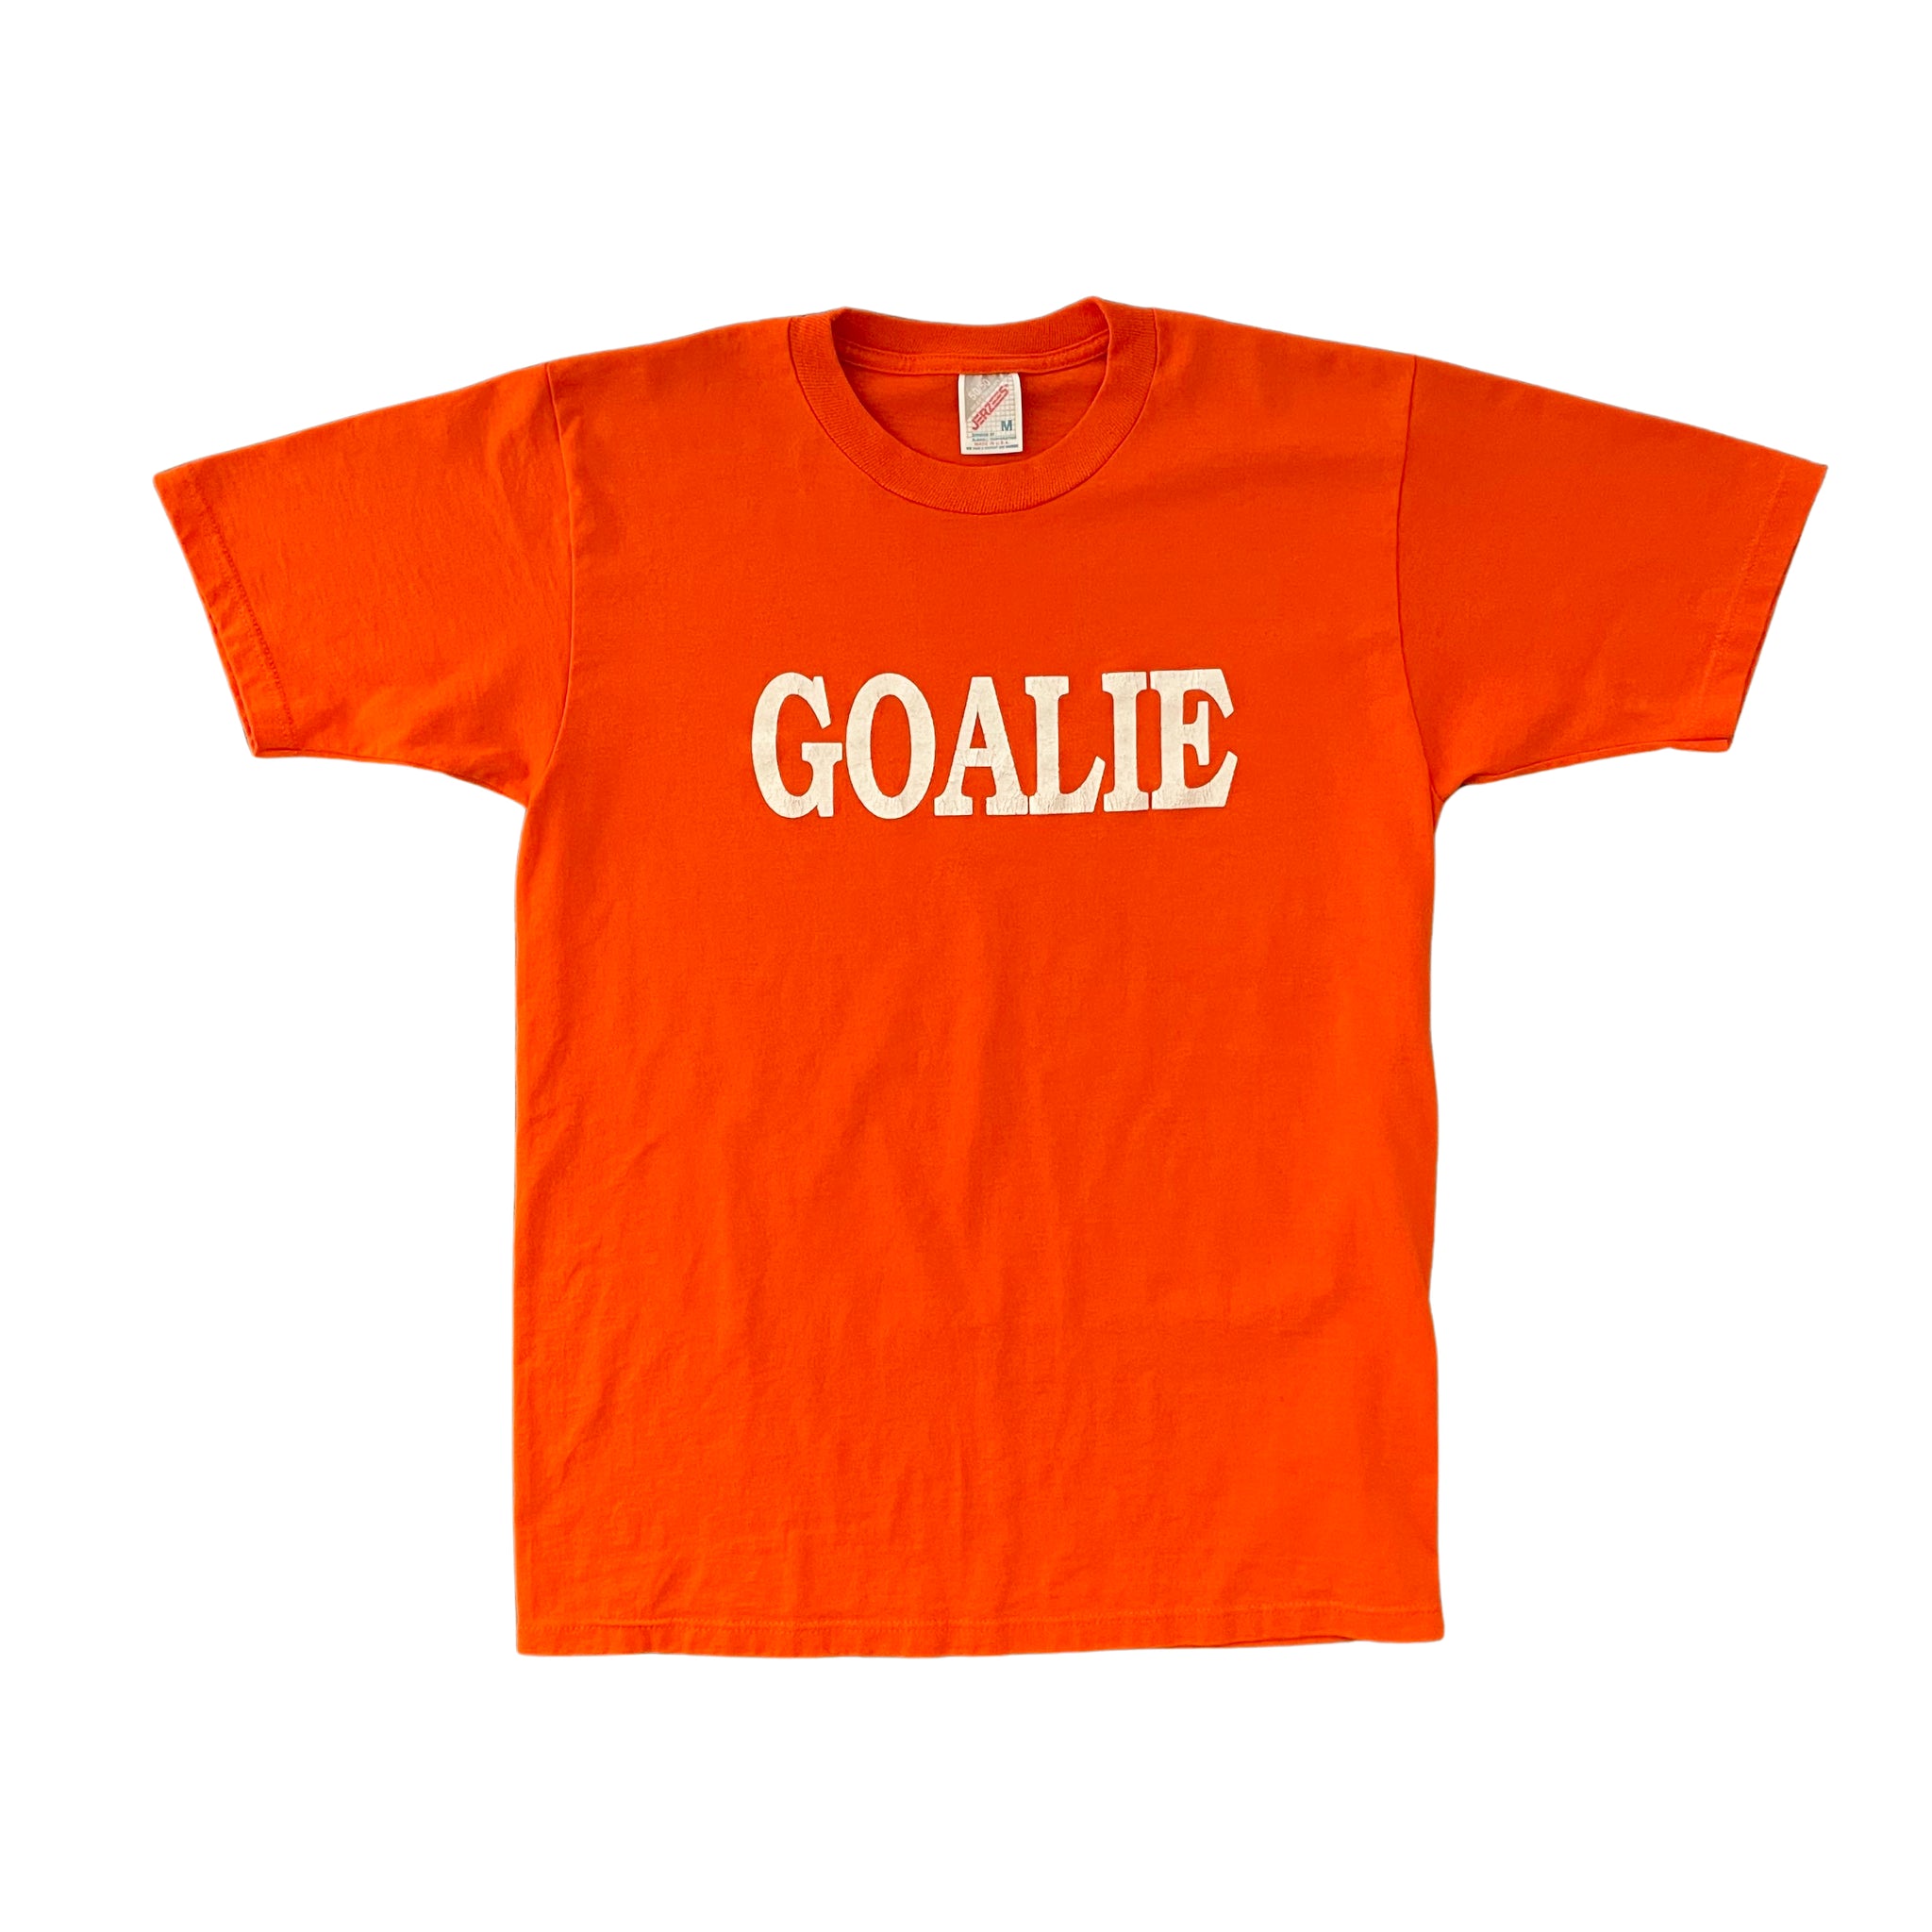 GOALIE Graphic T-Shirt - M